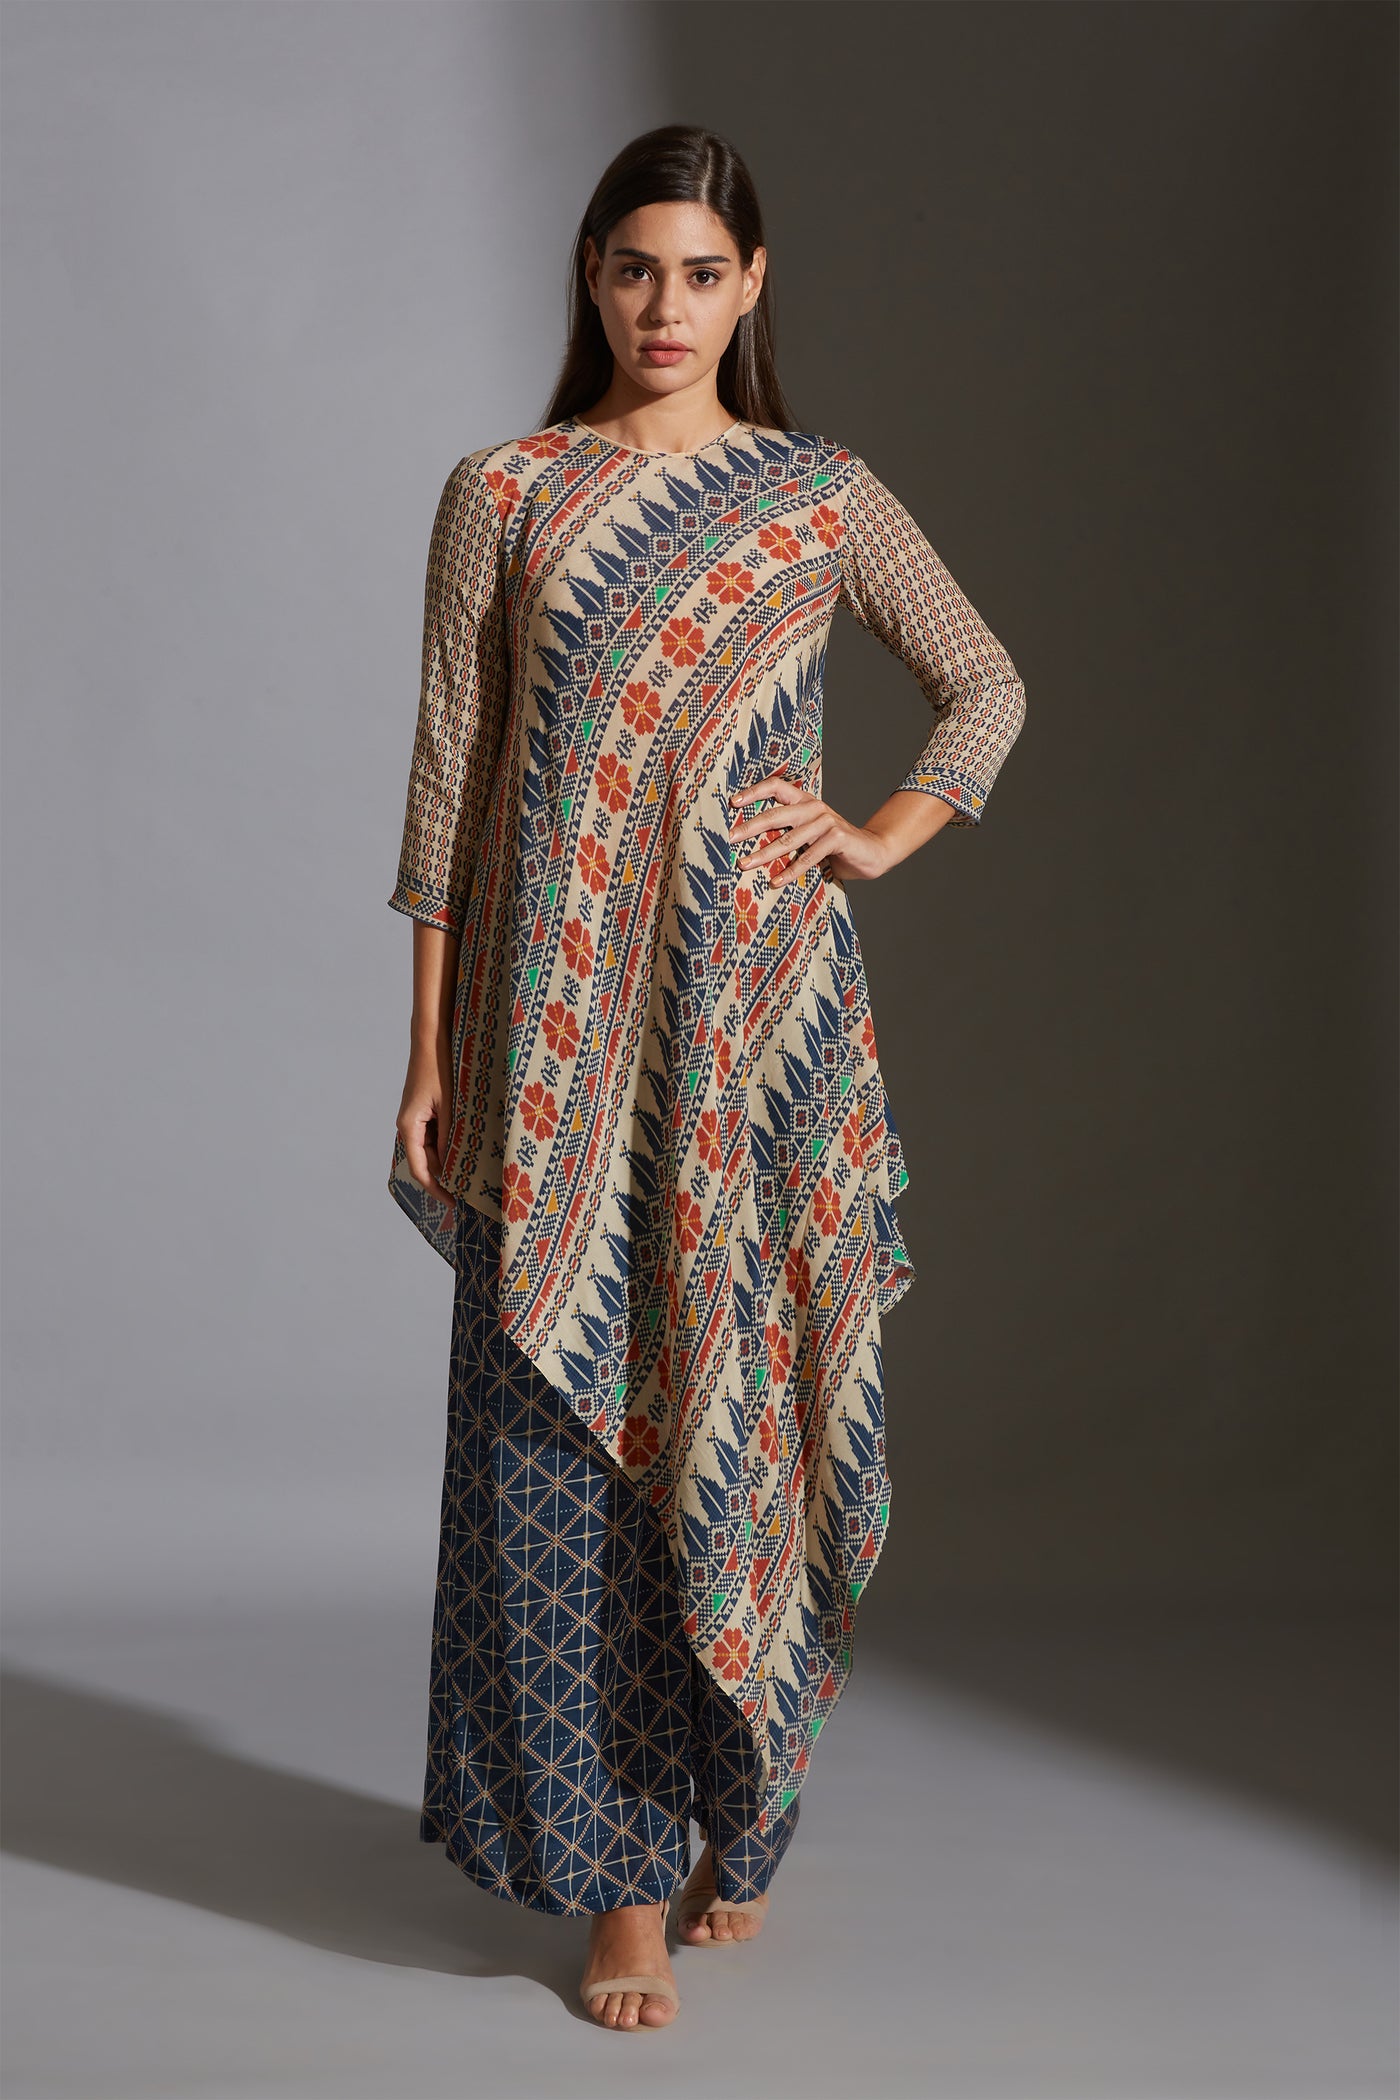 sougat paul Asymmetrical printed top with printed pants multicolor festive fusion indian designer wear online shopping melange singapore